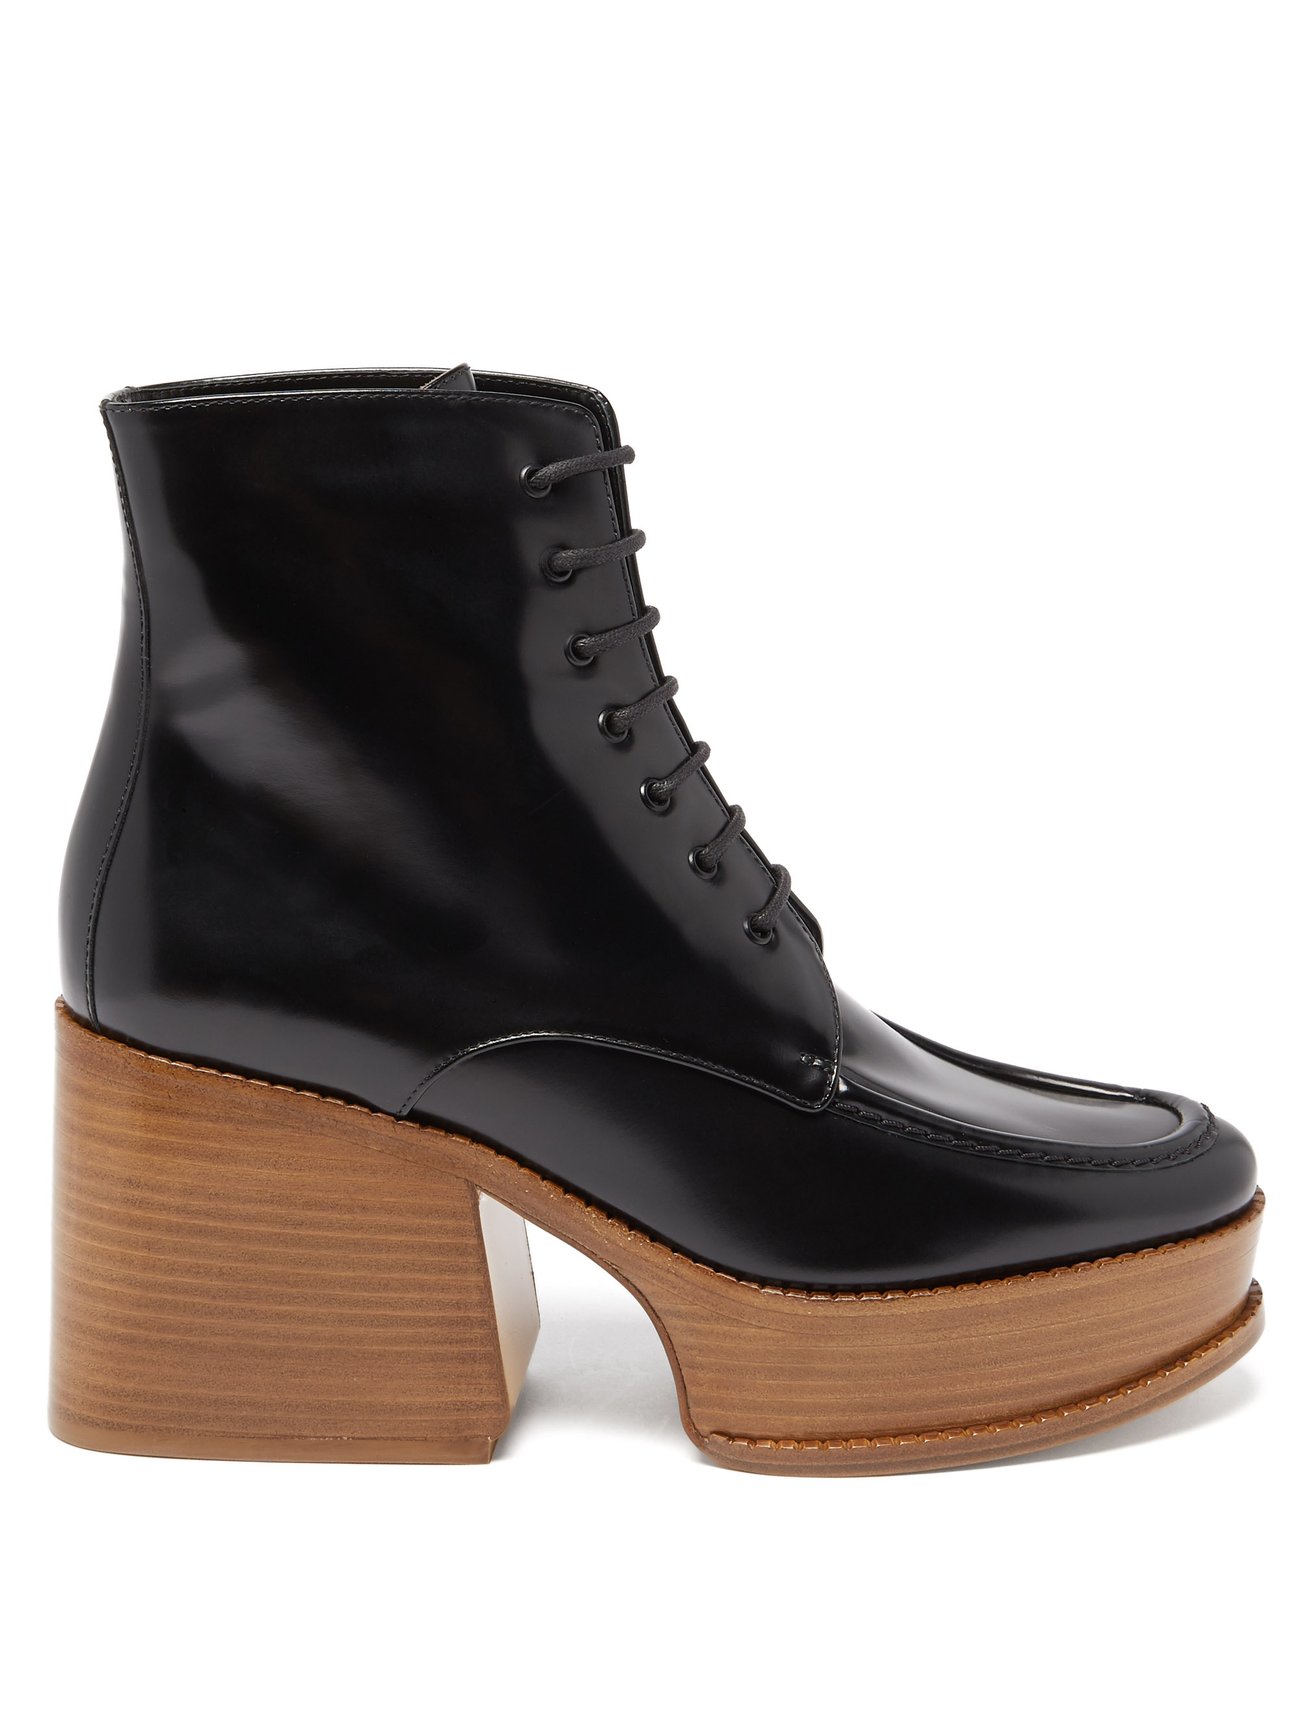 Hattie leather platform ankle boots